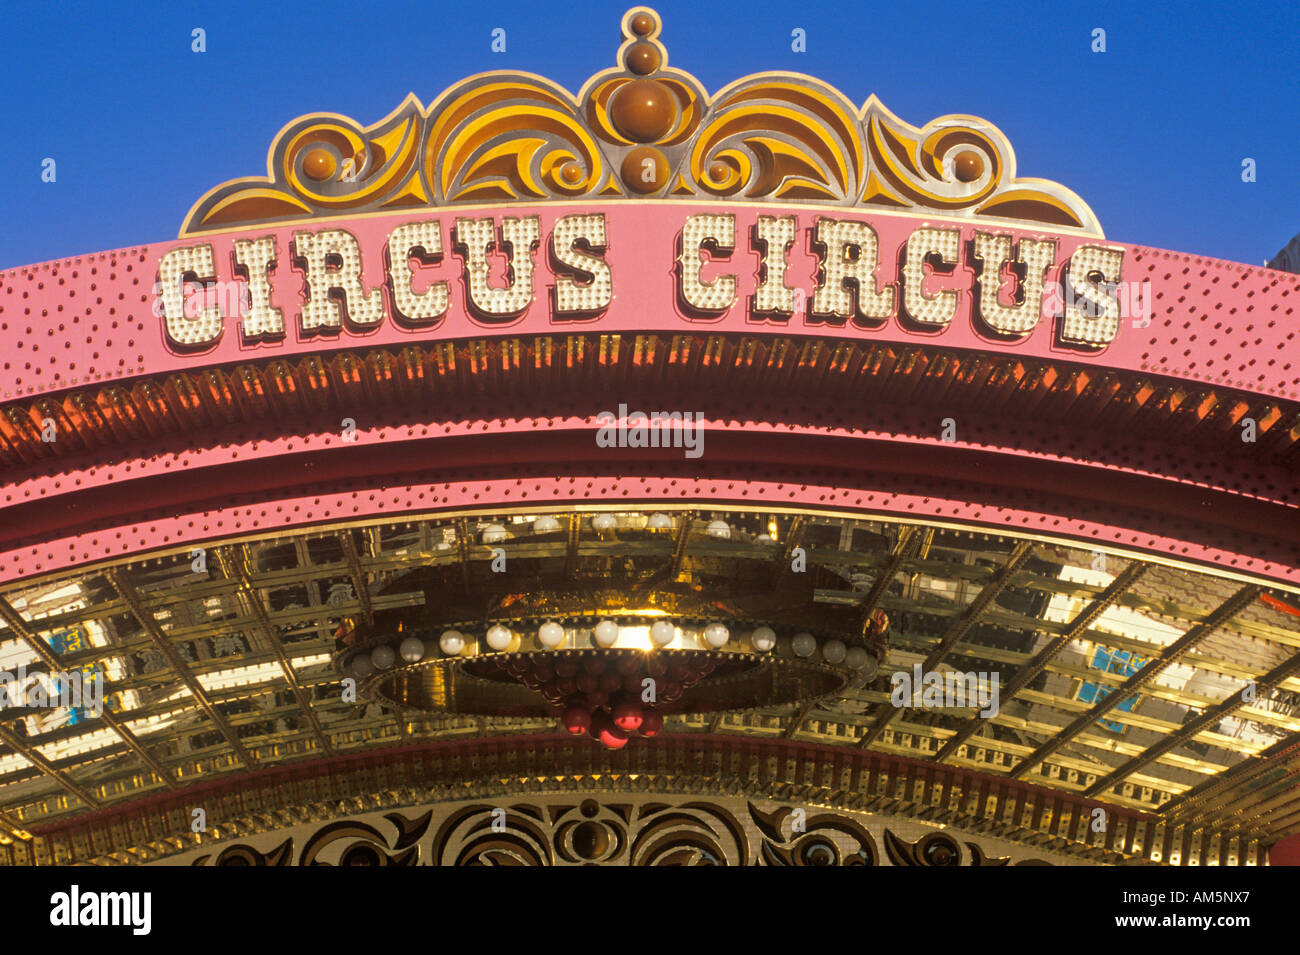 Circus Circus Hotel and Casino Las Vegas NV Stock Photo